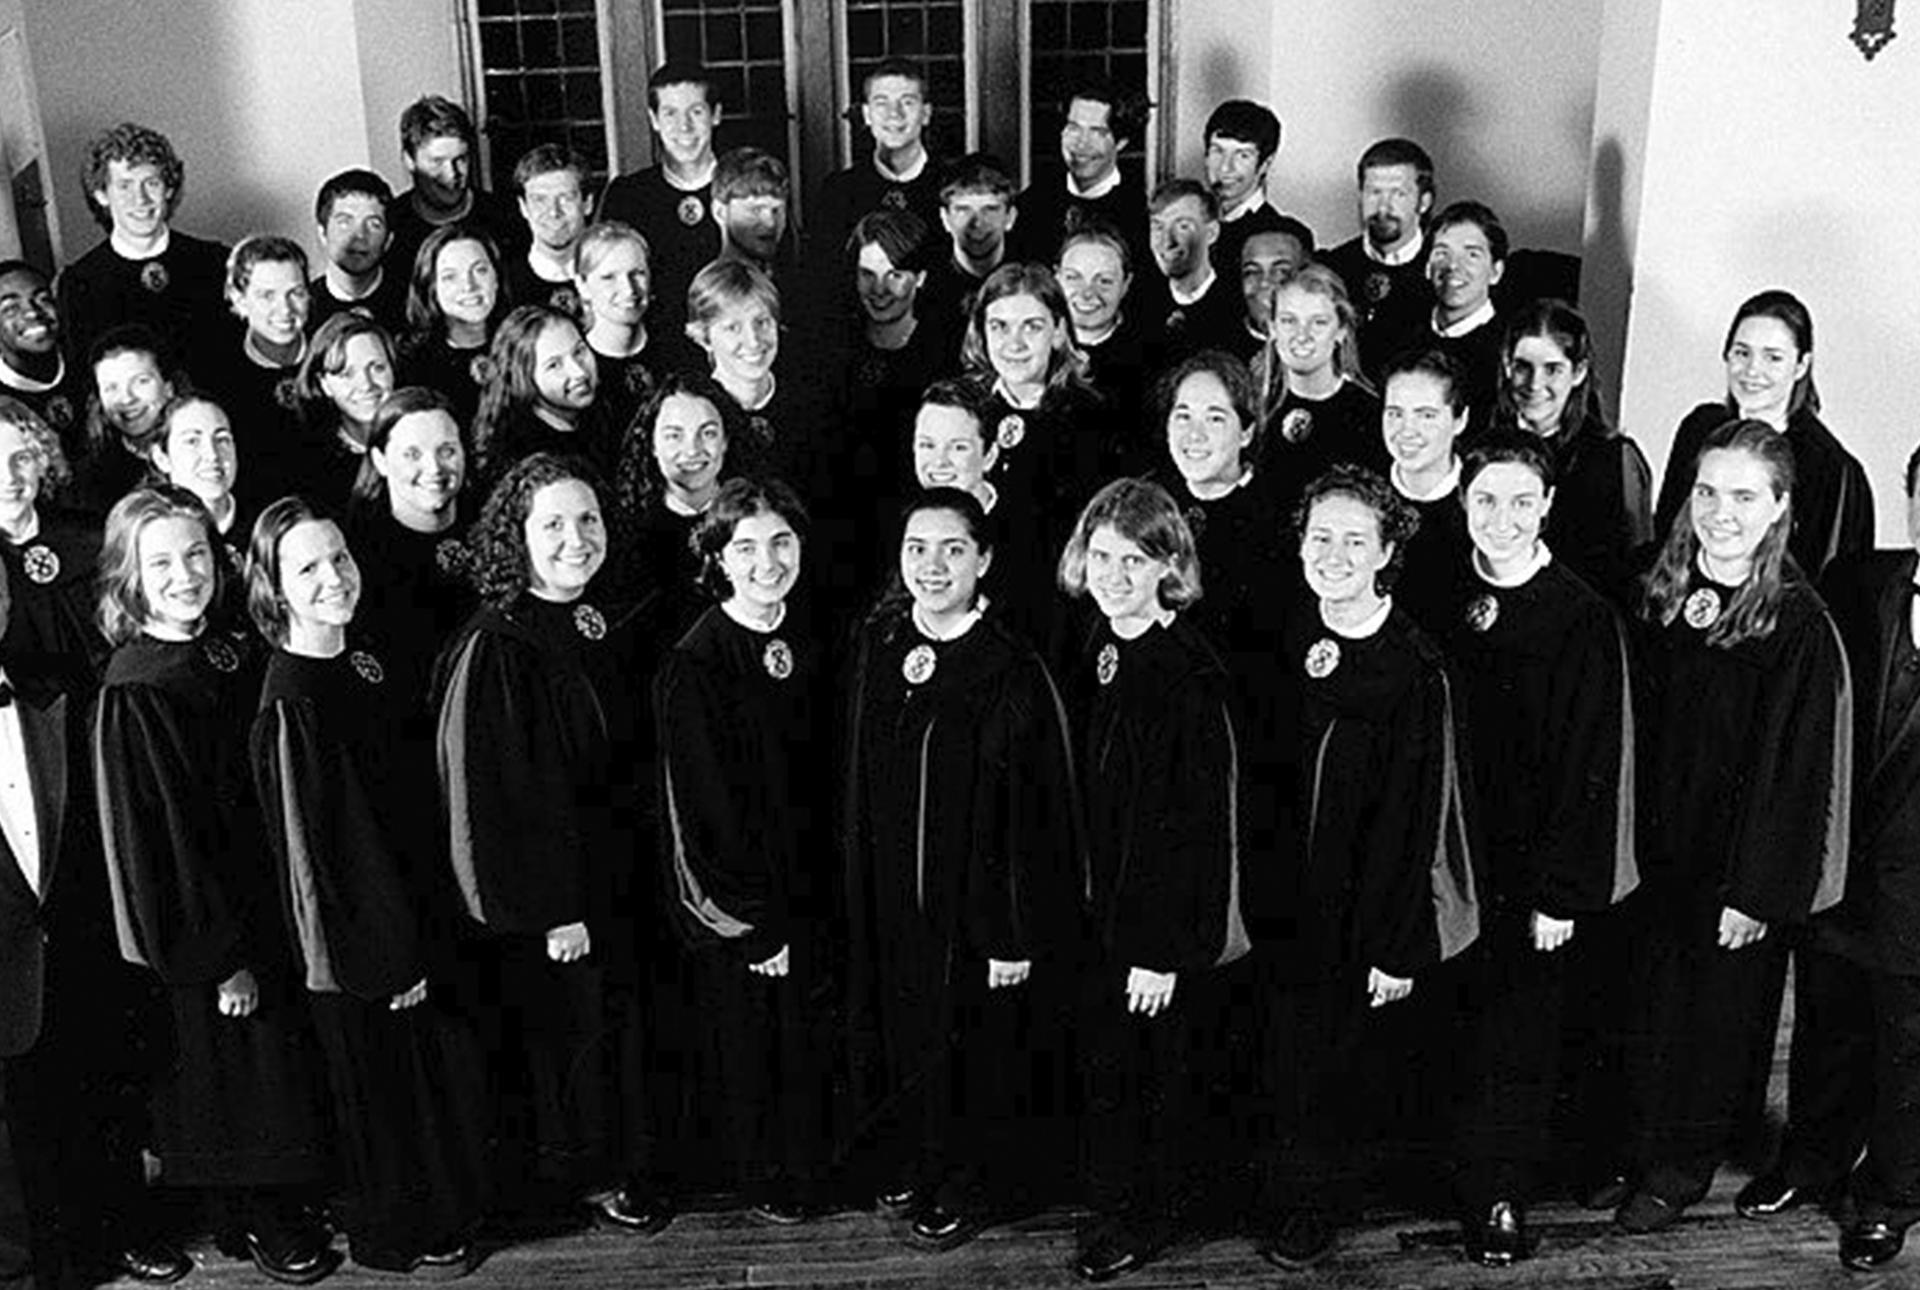 a large group photo of music alumni